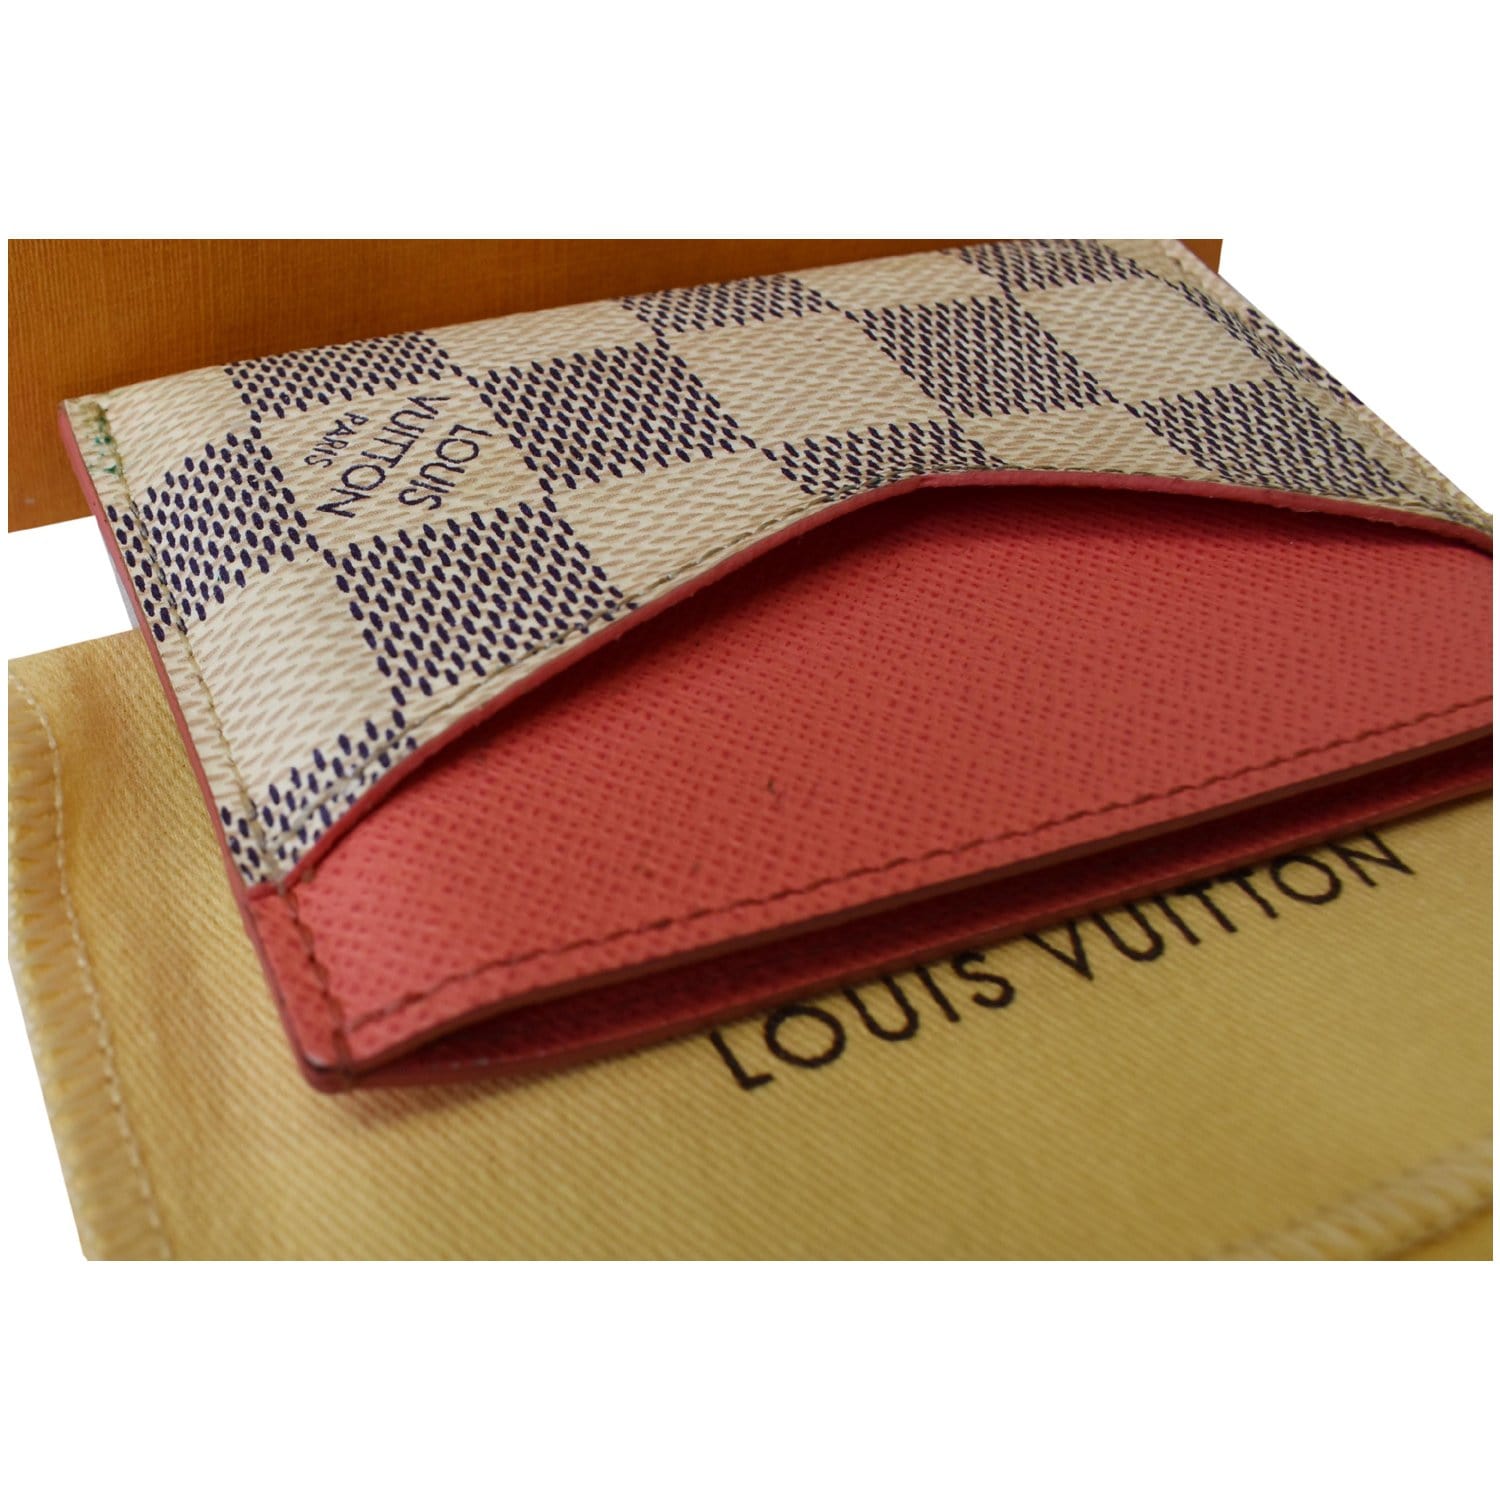 Louis Vuitton Damier Azur Daily Card Holder Louis Vuitton